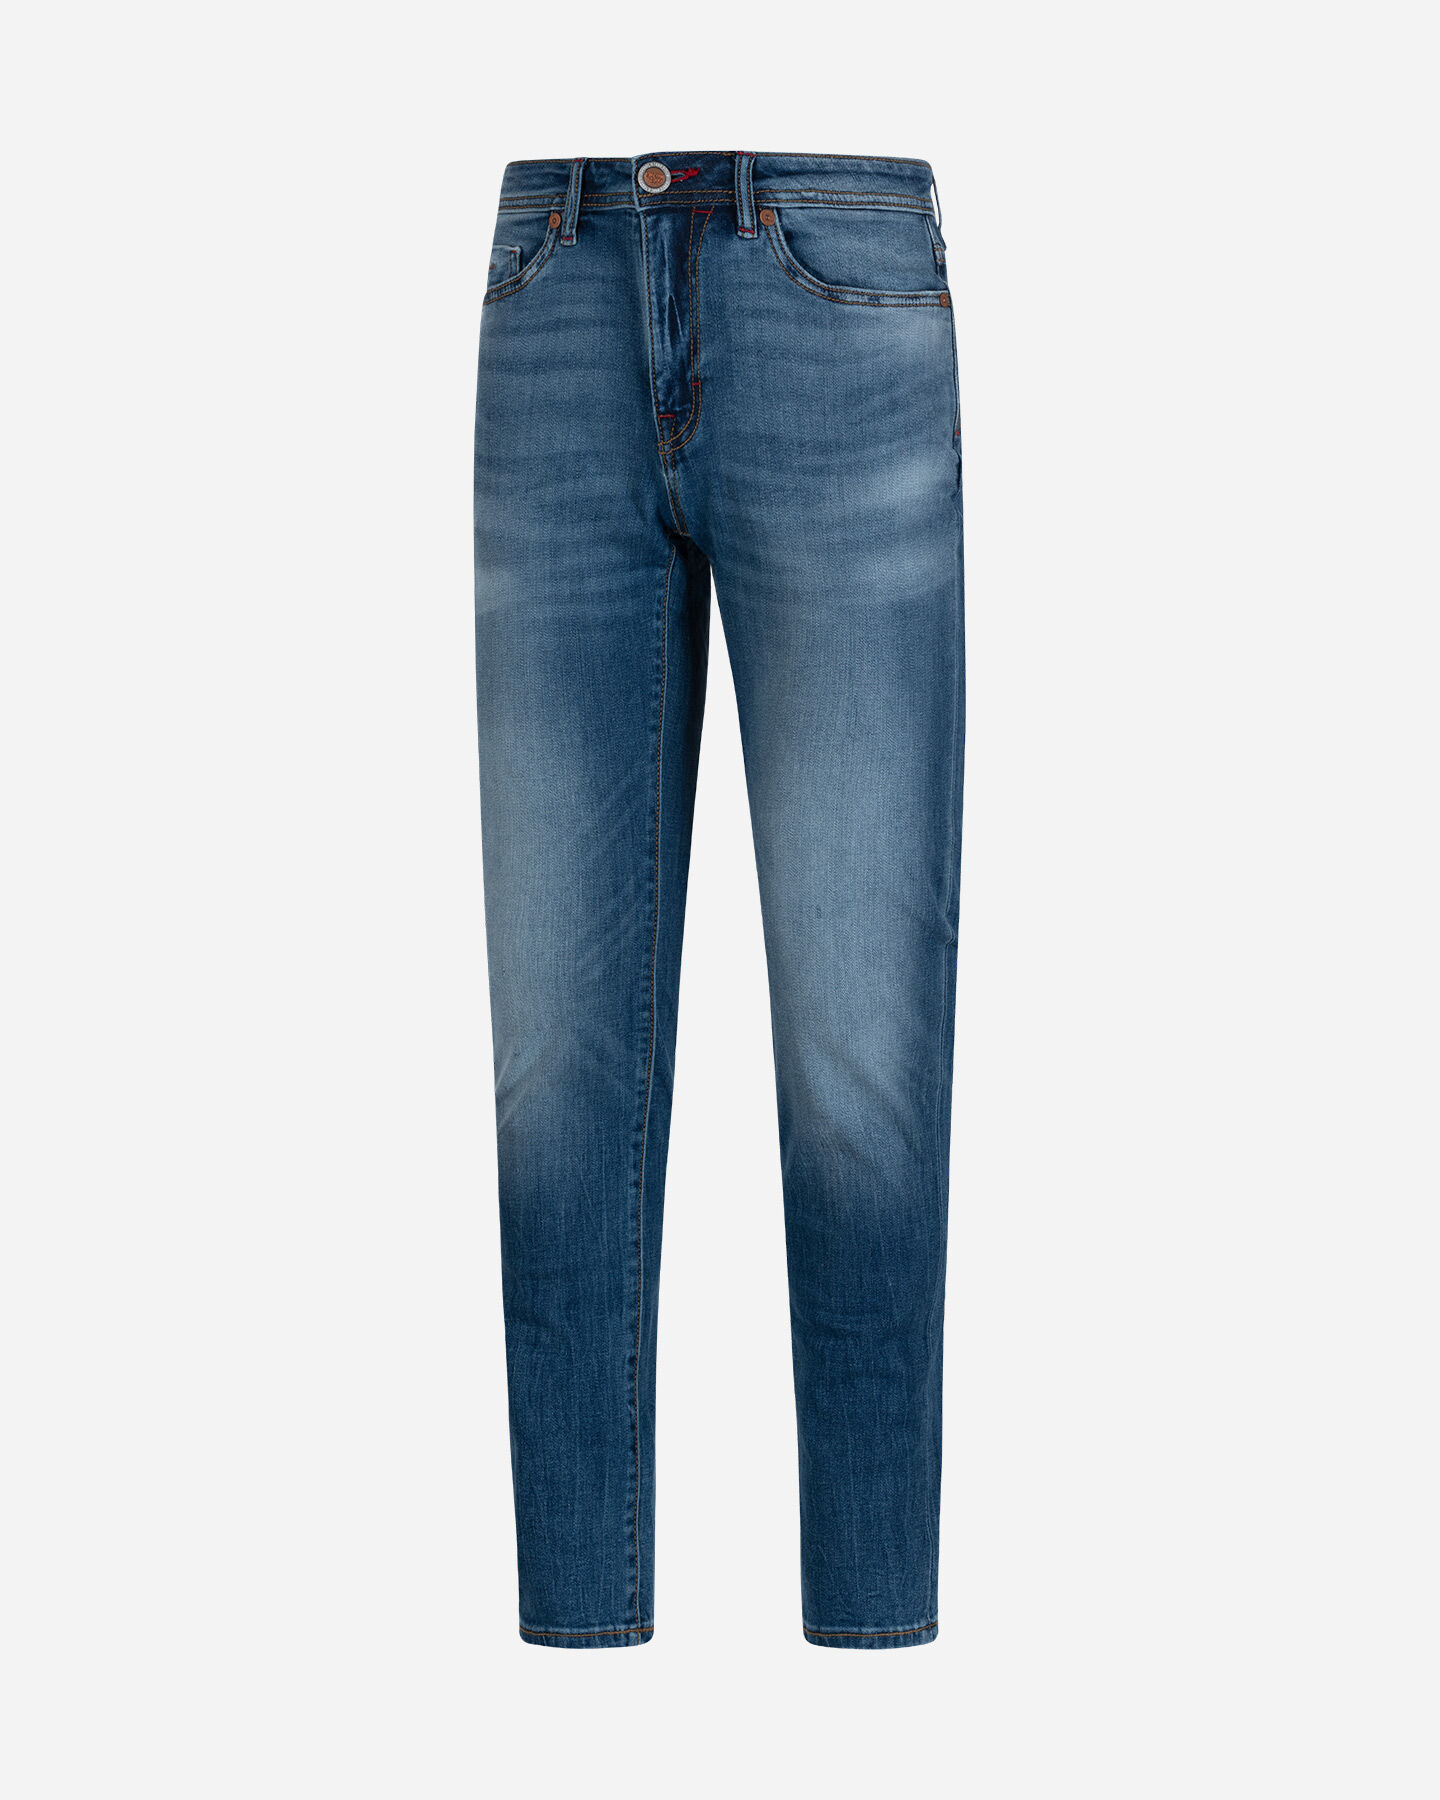  Jeans COTTON BELT 5 POCKET M S4126998|MD|36 scatto 4